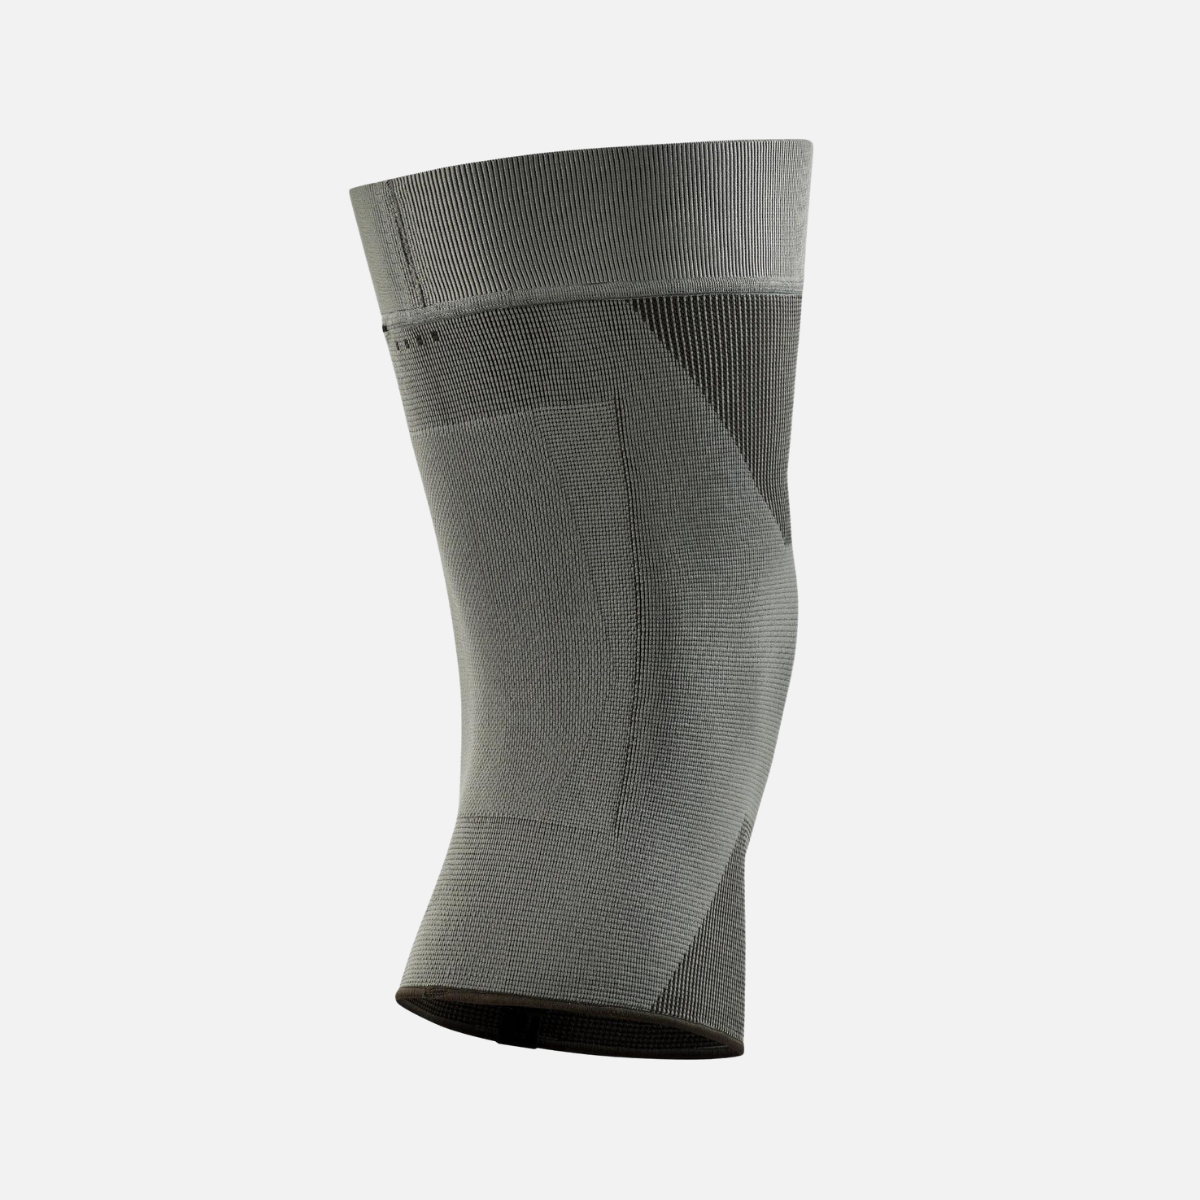 Cep Mid Support Unisex Knee Sleeve -Grey